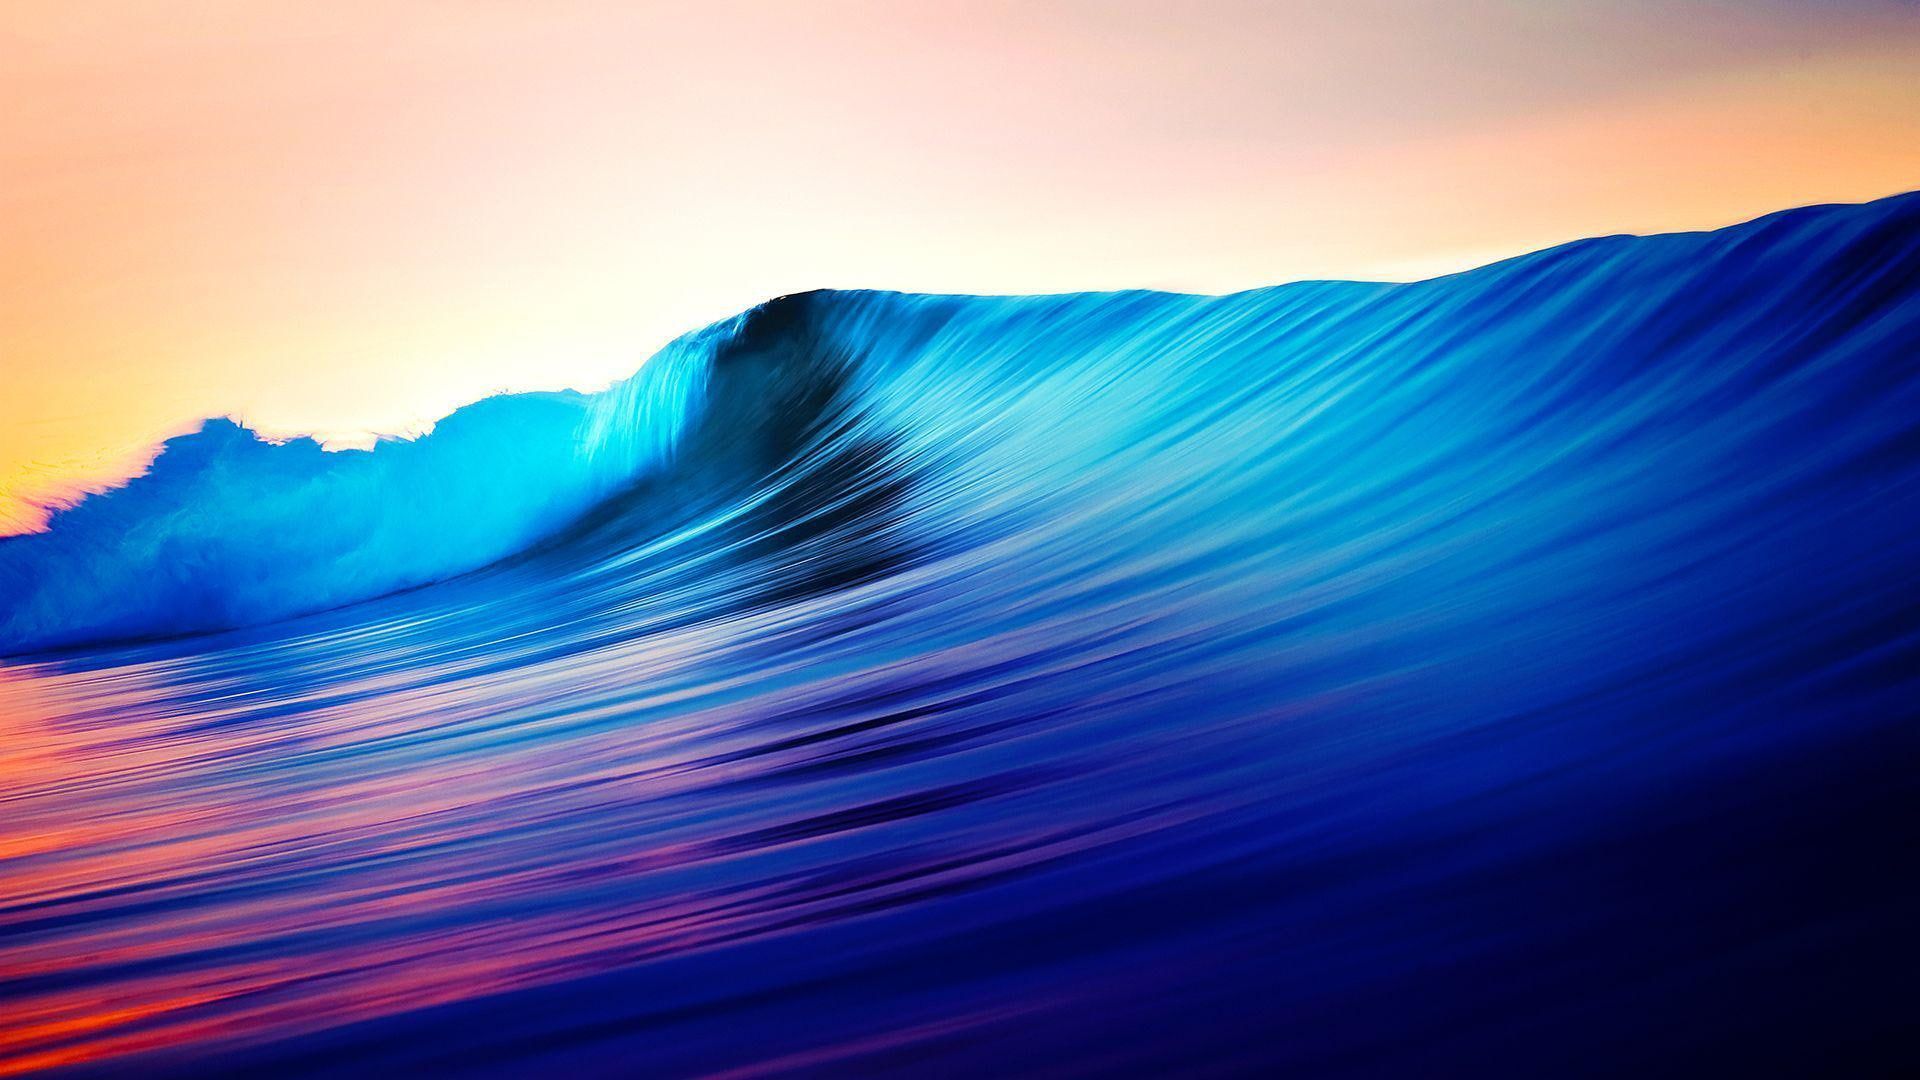 Colorful waves, tidal wave #photography x1080 #wave P #wallpaper #hdwallpaper #desktop. Waves wallpaper, Waves photography, Waves